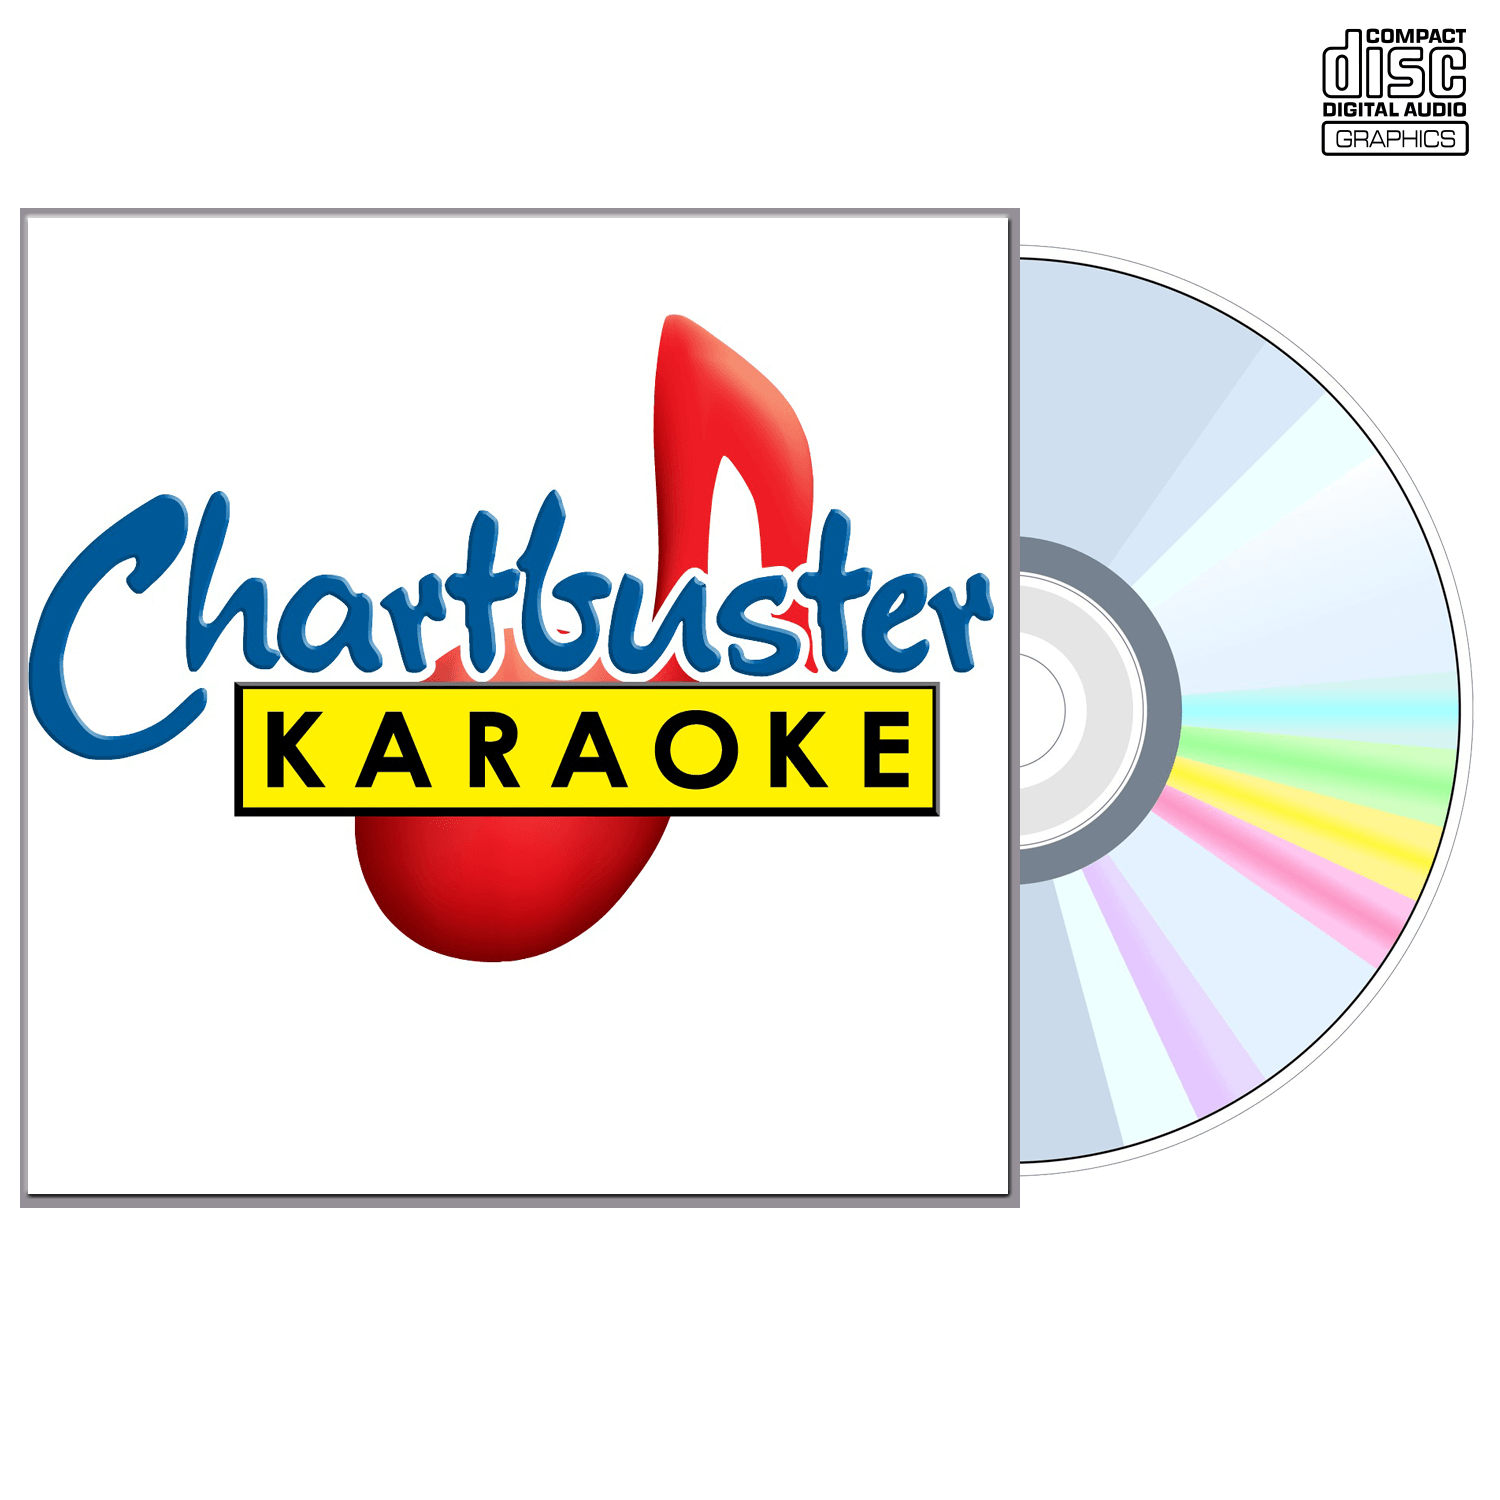 Julie Roberts - CD+G - Chartbuster Karaoke - Karaoke Home Entertainment